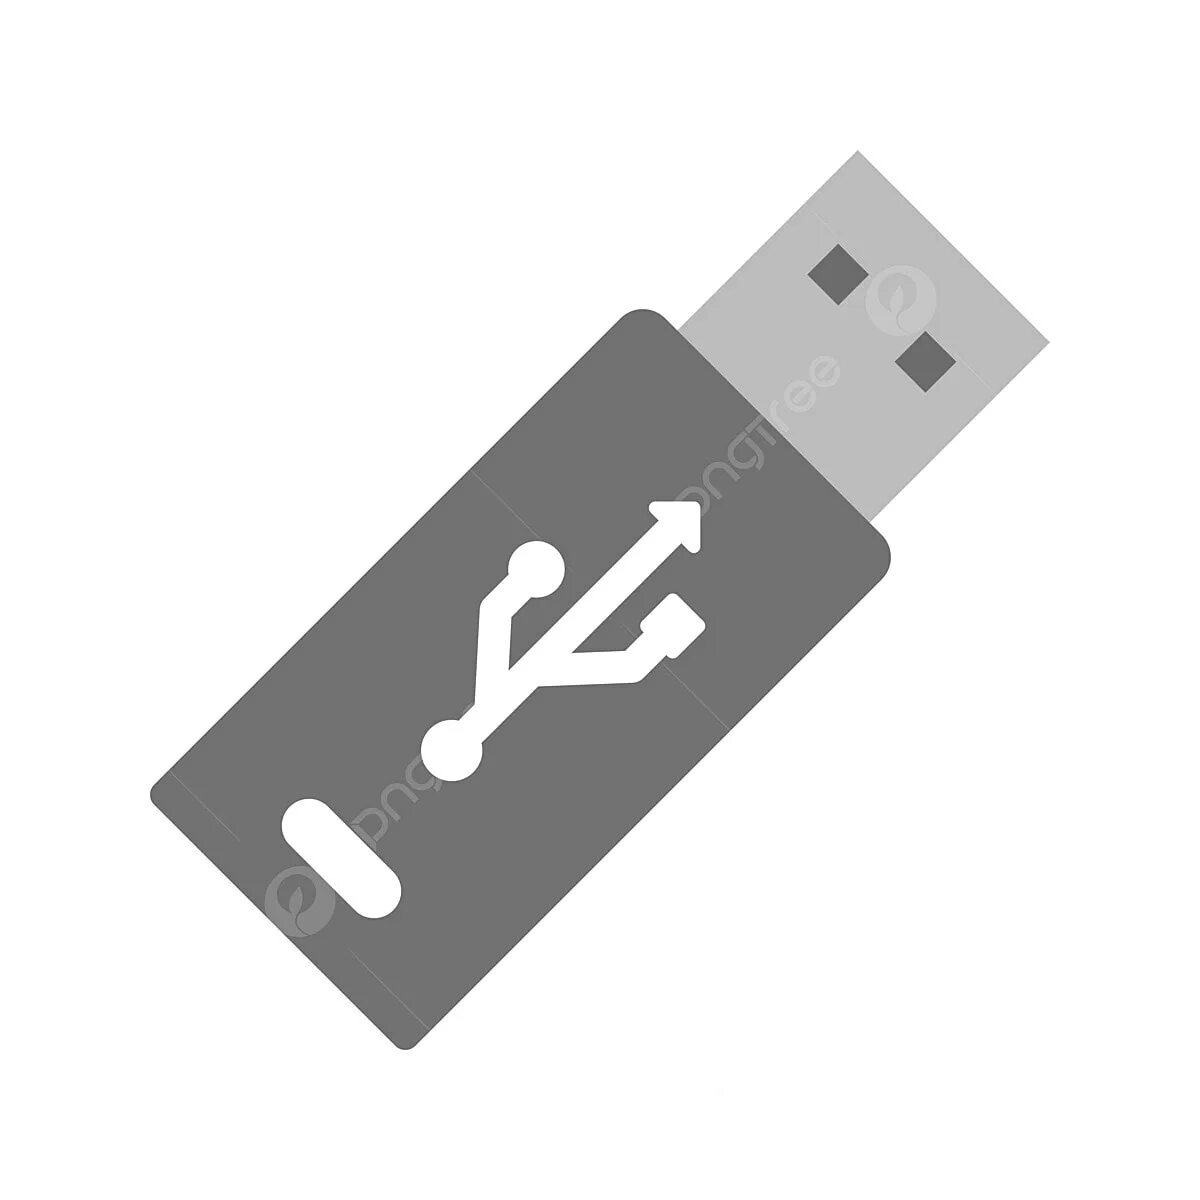 Флешка делает ярлык. Значок USB. USB флешка значок. USB порт иконка. Ярлык для флешки.